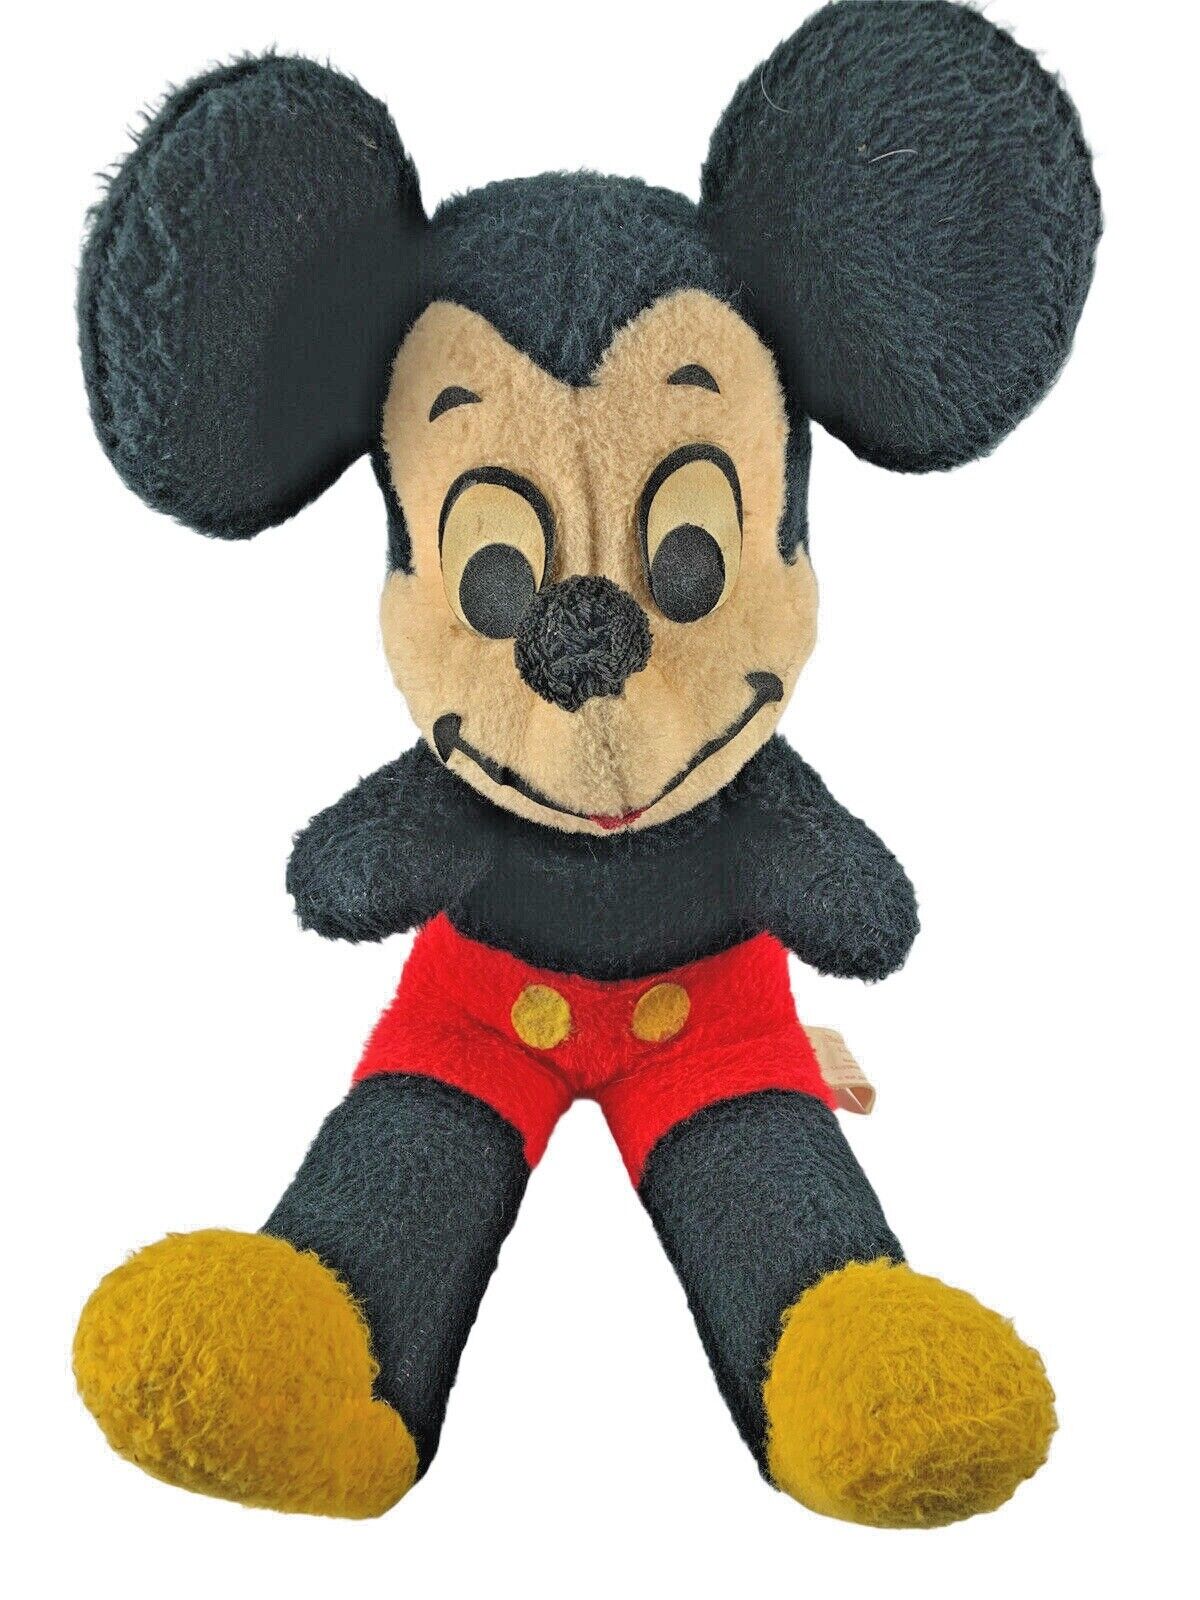 Vintage Mickey Mouse Stuffed Plush Doll Mid Century Steiff Era       